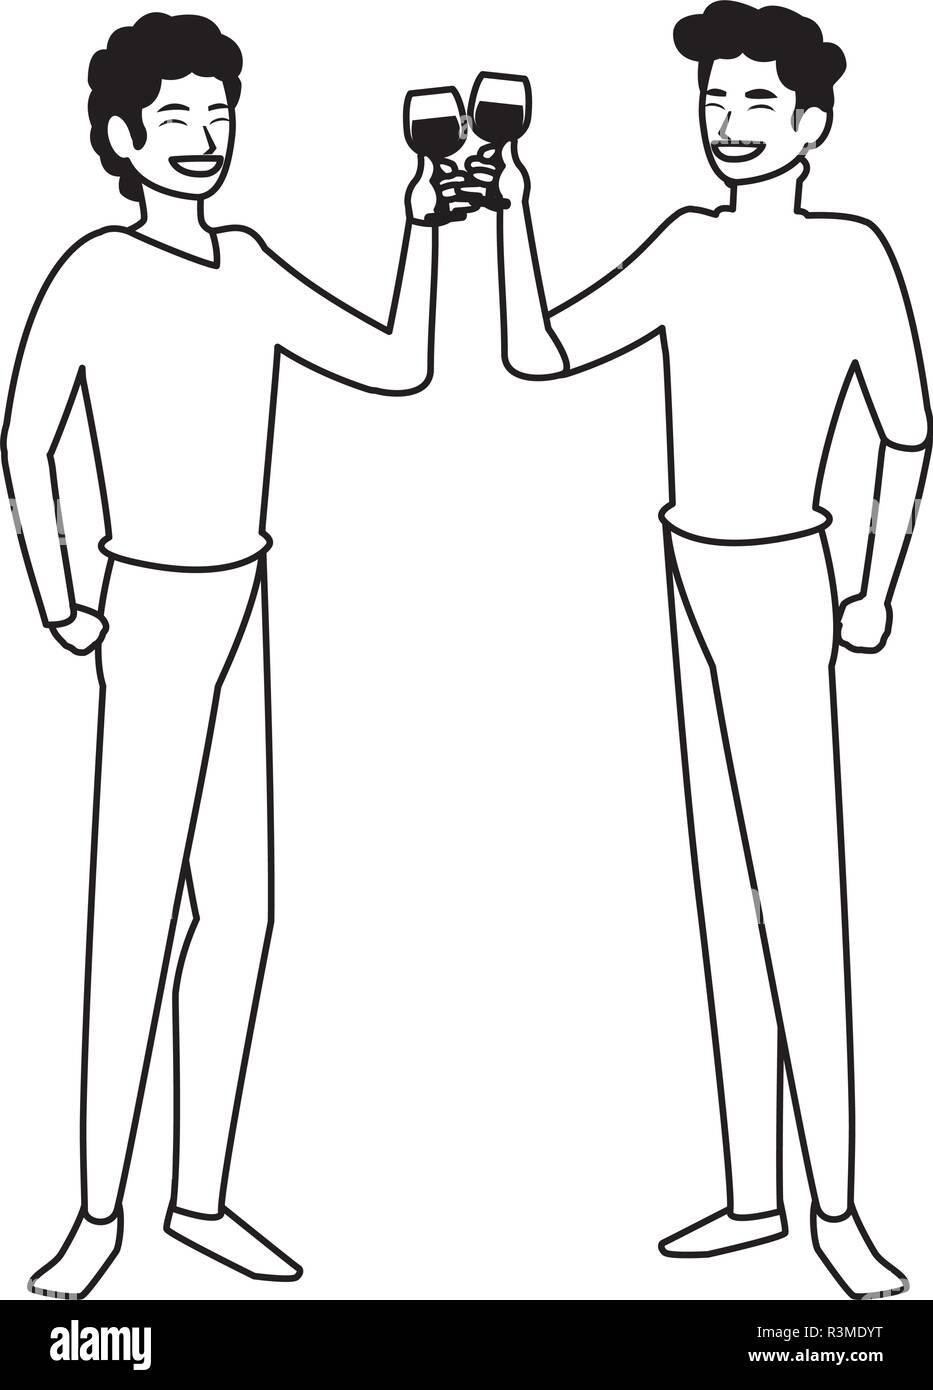 Cartoon felici uomini su sfondo bianco, illustrazione vettoriale Illustrazione Vettoriale